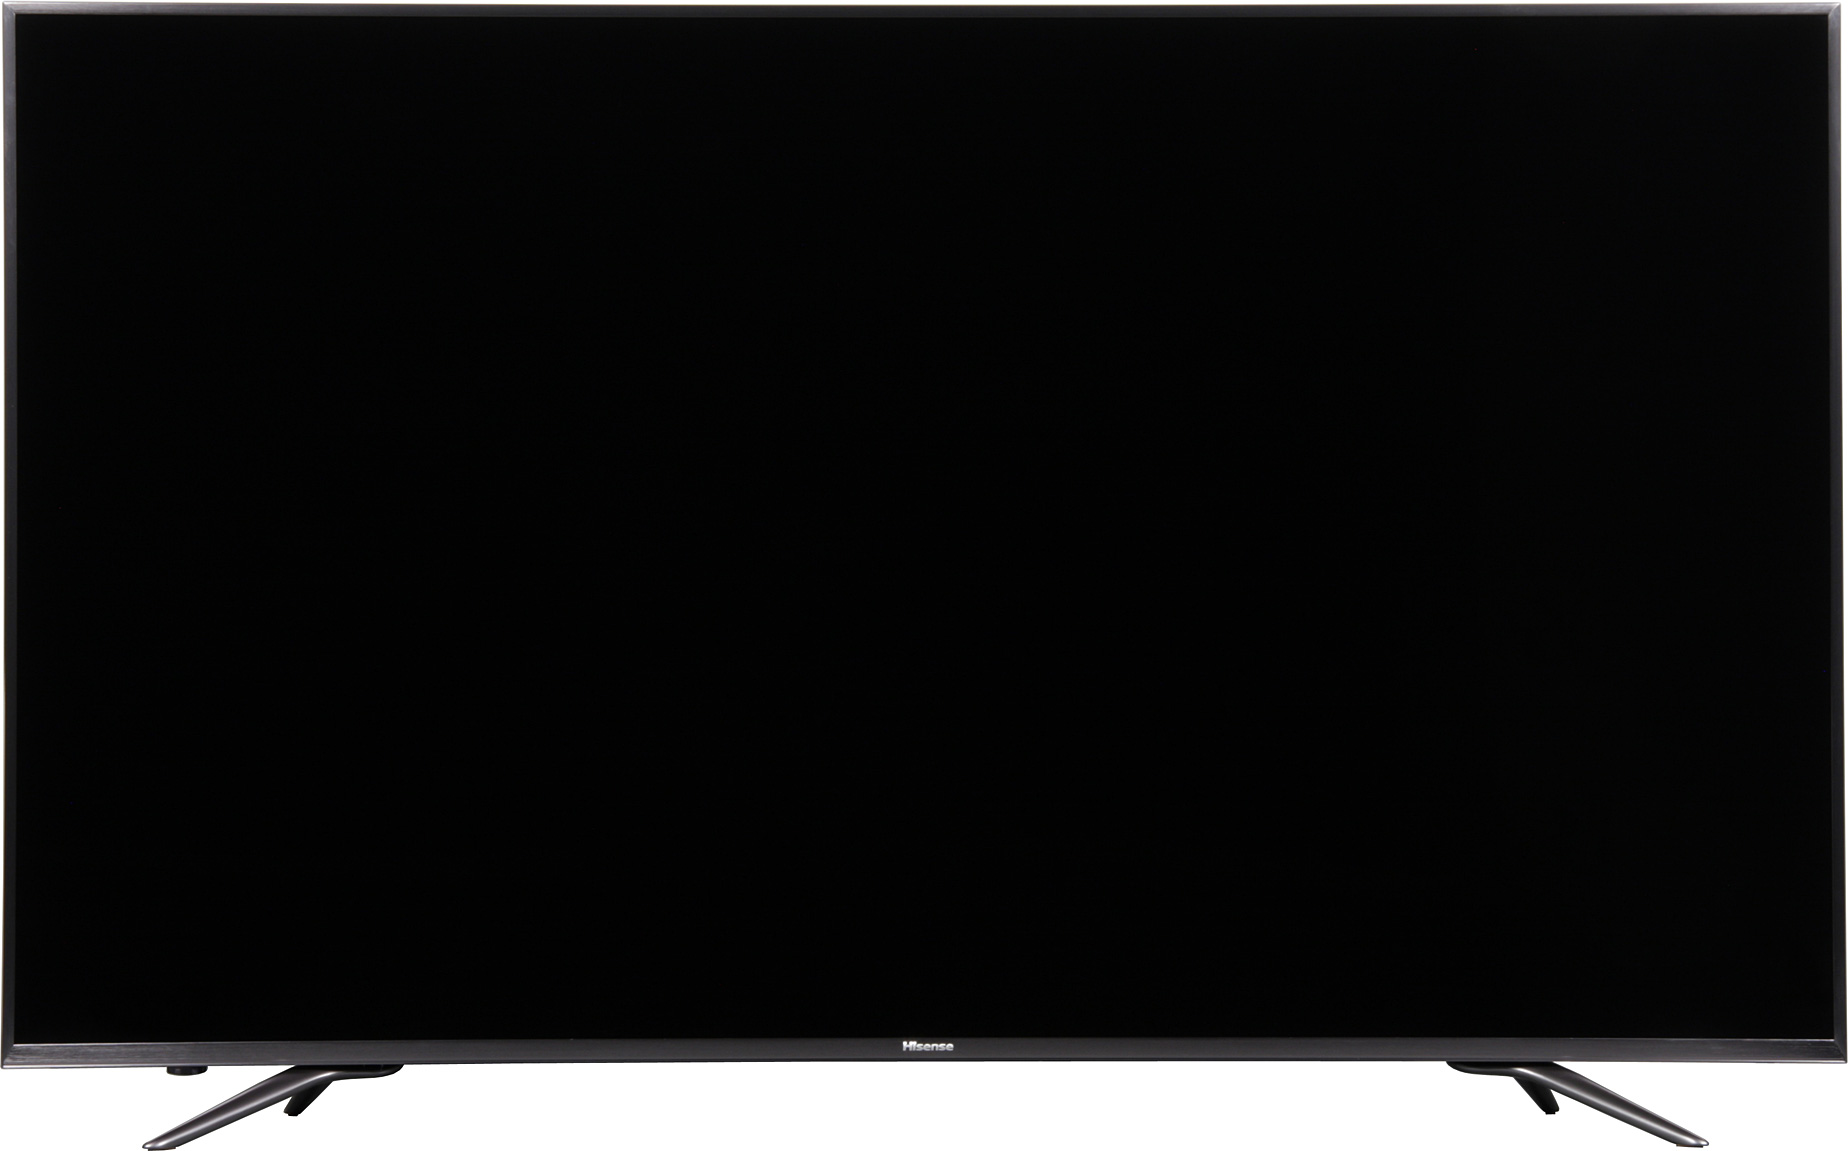 Обзор телевизоров Hisense: качество и функционал